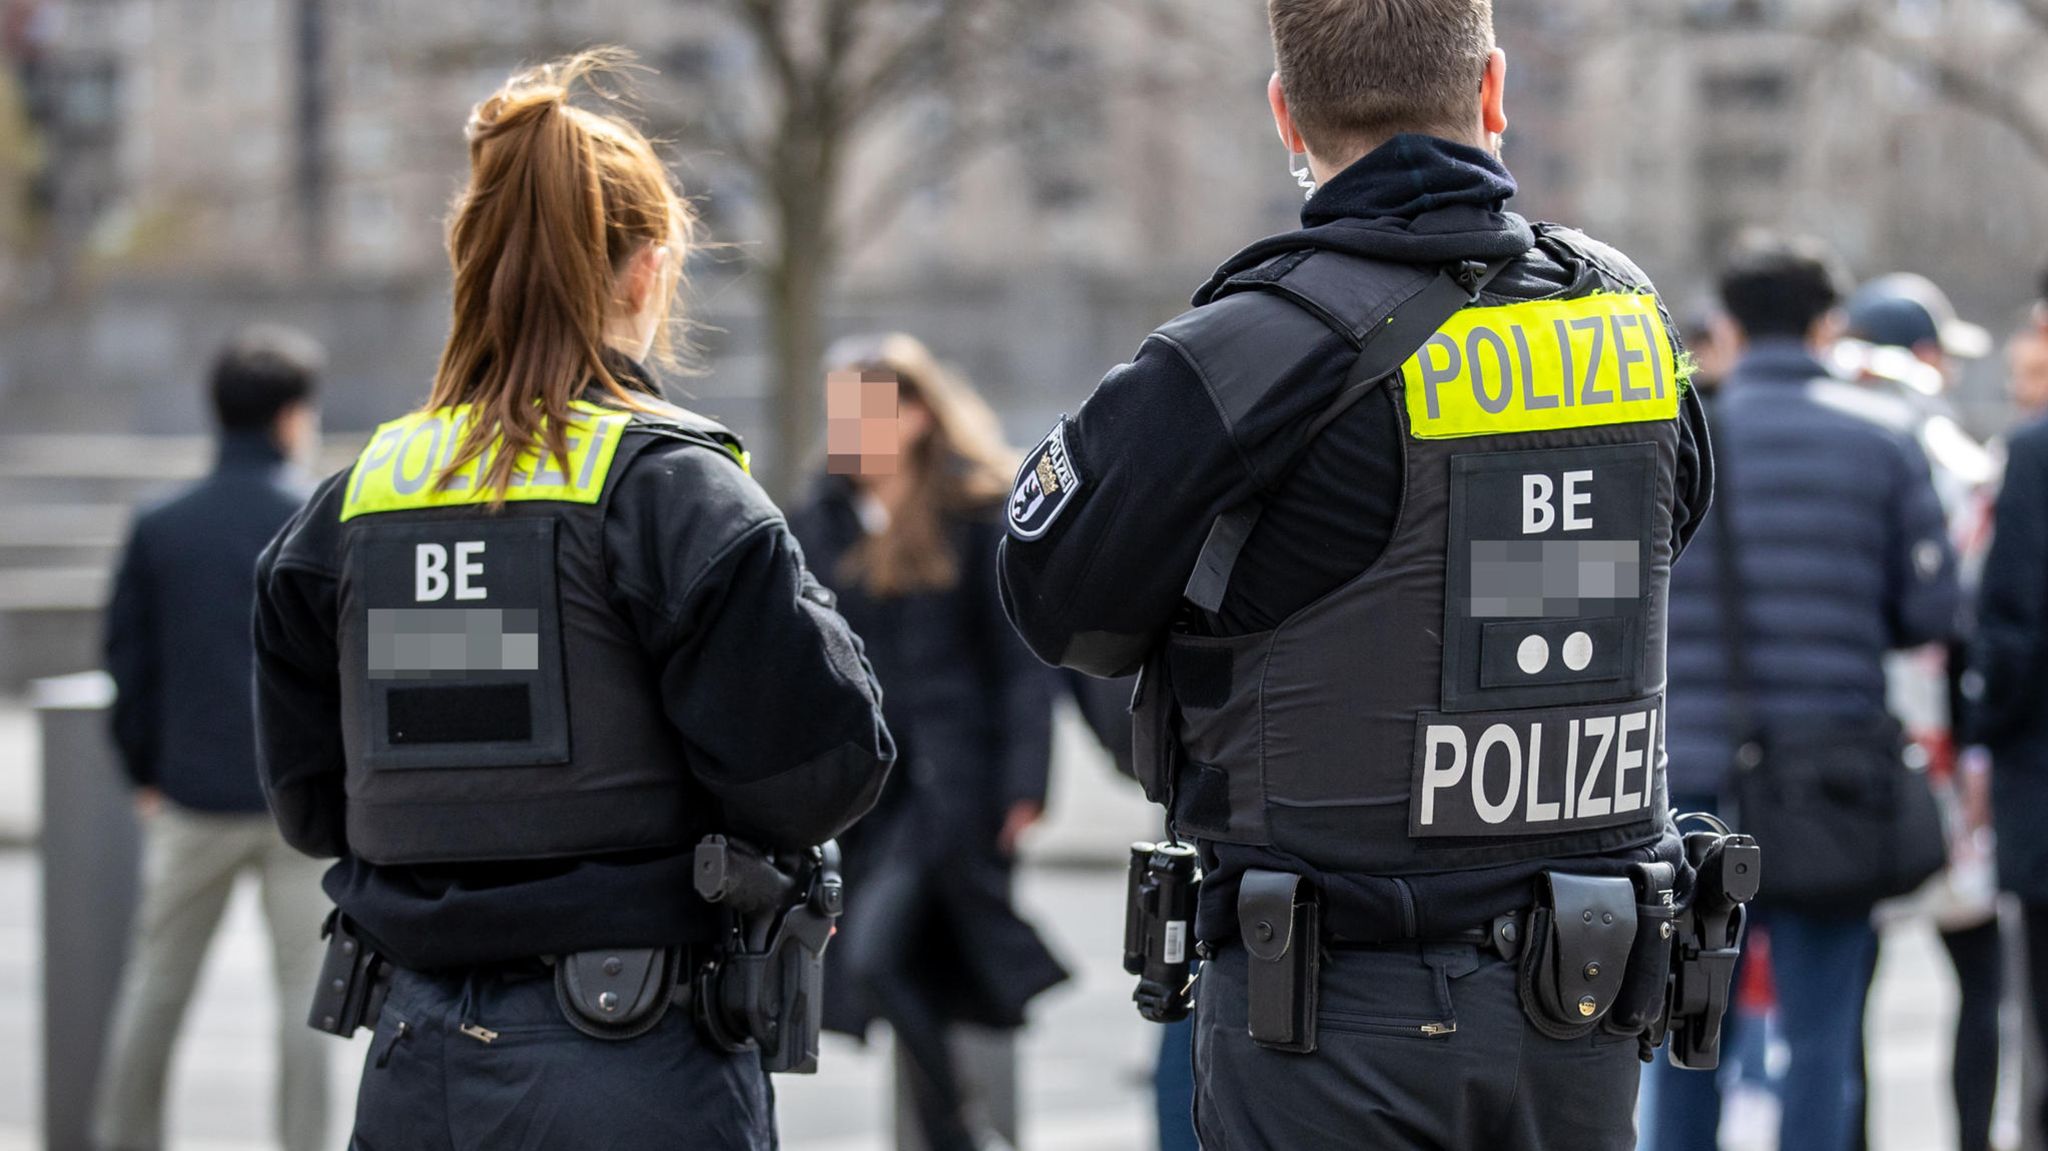 Berlin Polizisten bedrohen betrunken zwei Männer mit Waffen STERN.de